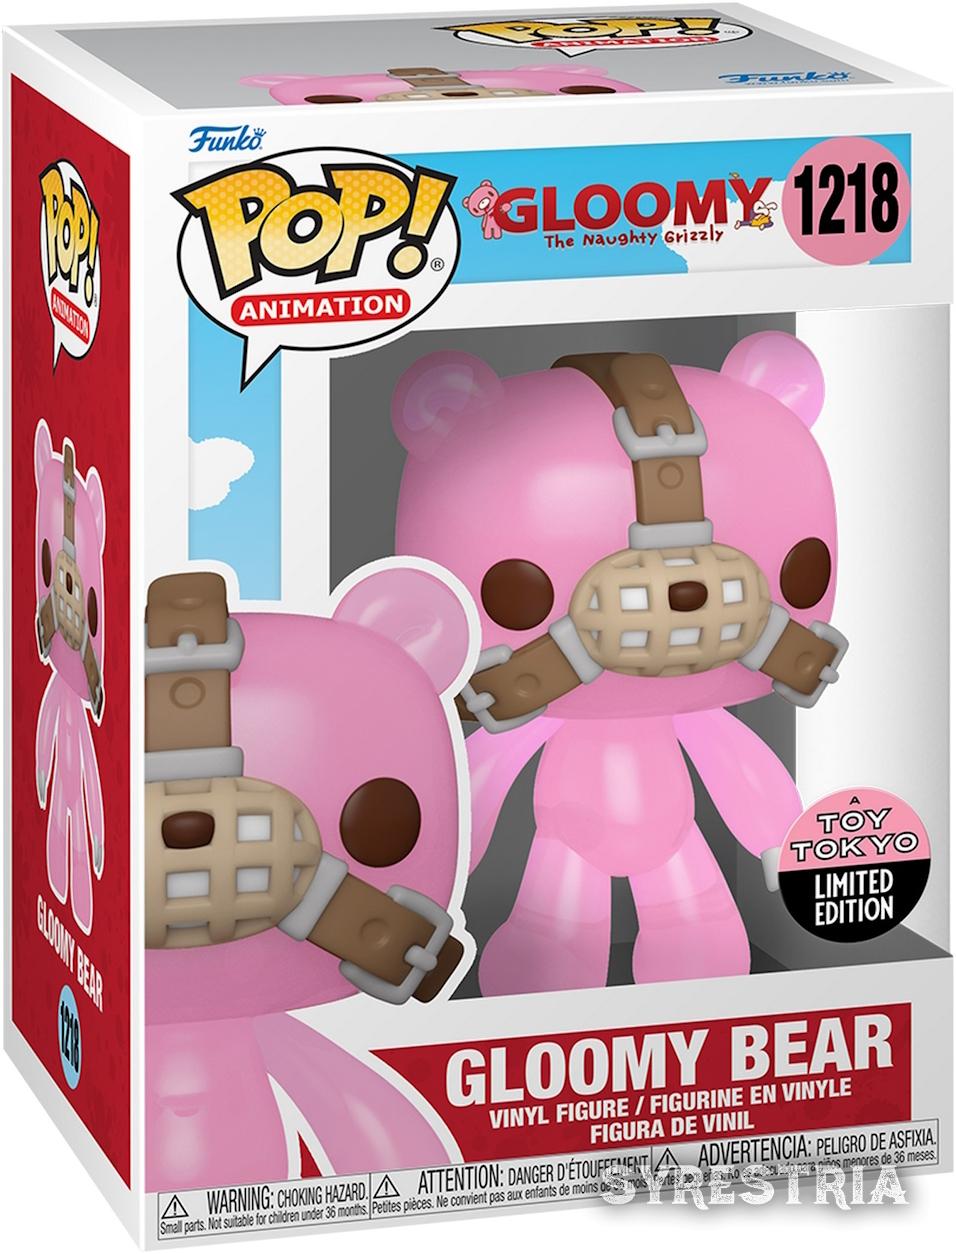 Gloomy - Gloomy Bear 1218 Toy Tokyo Limited Edition - Funko Pop! Vinyl Figur